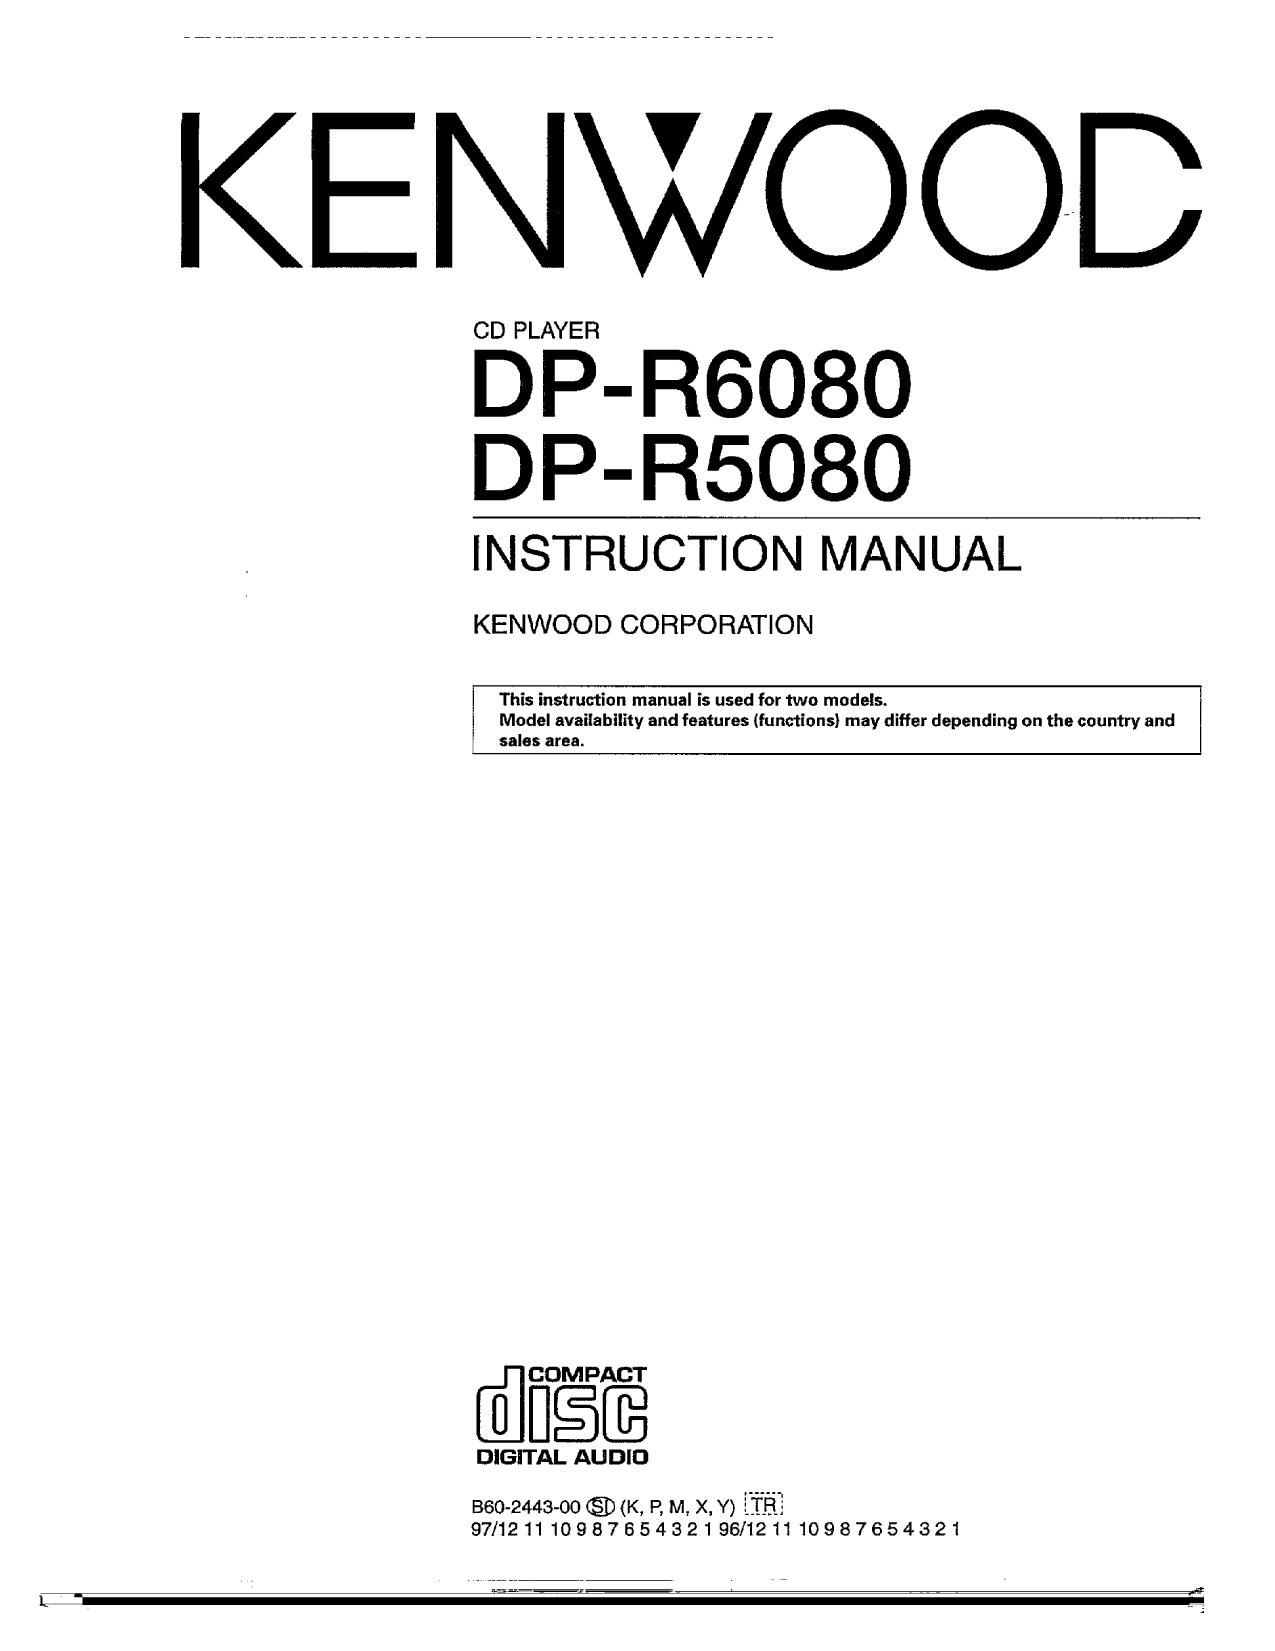 Kenwood DPR 5080 Owners Manual